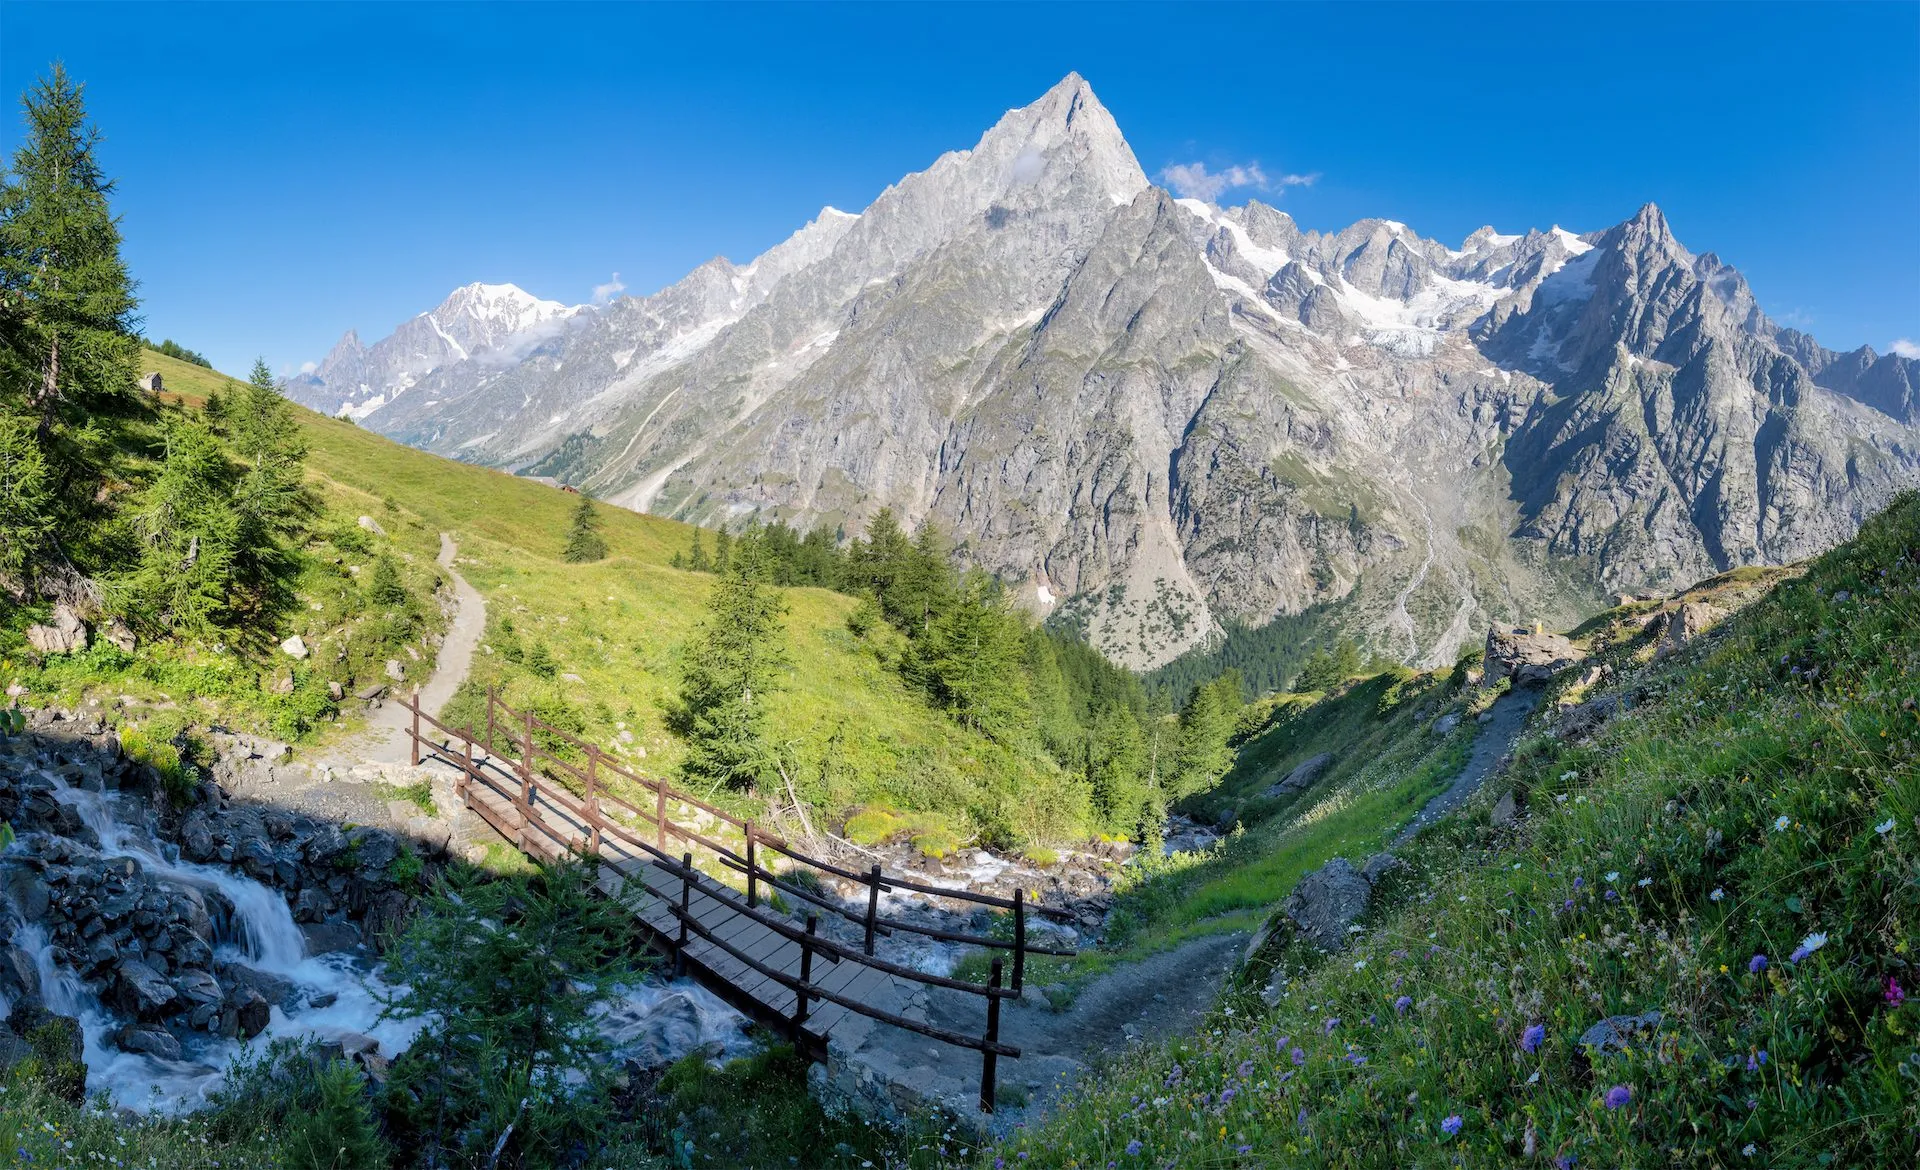 Le massif des Grandes Jorasses depuis la vallée du Val Ferret